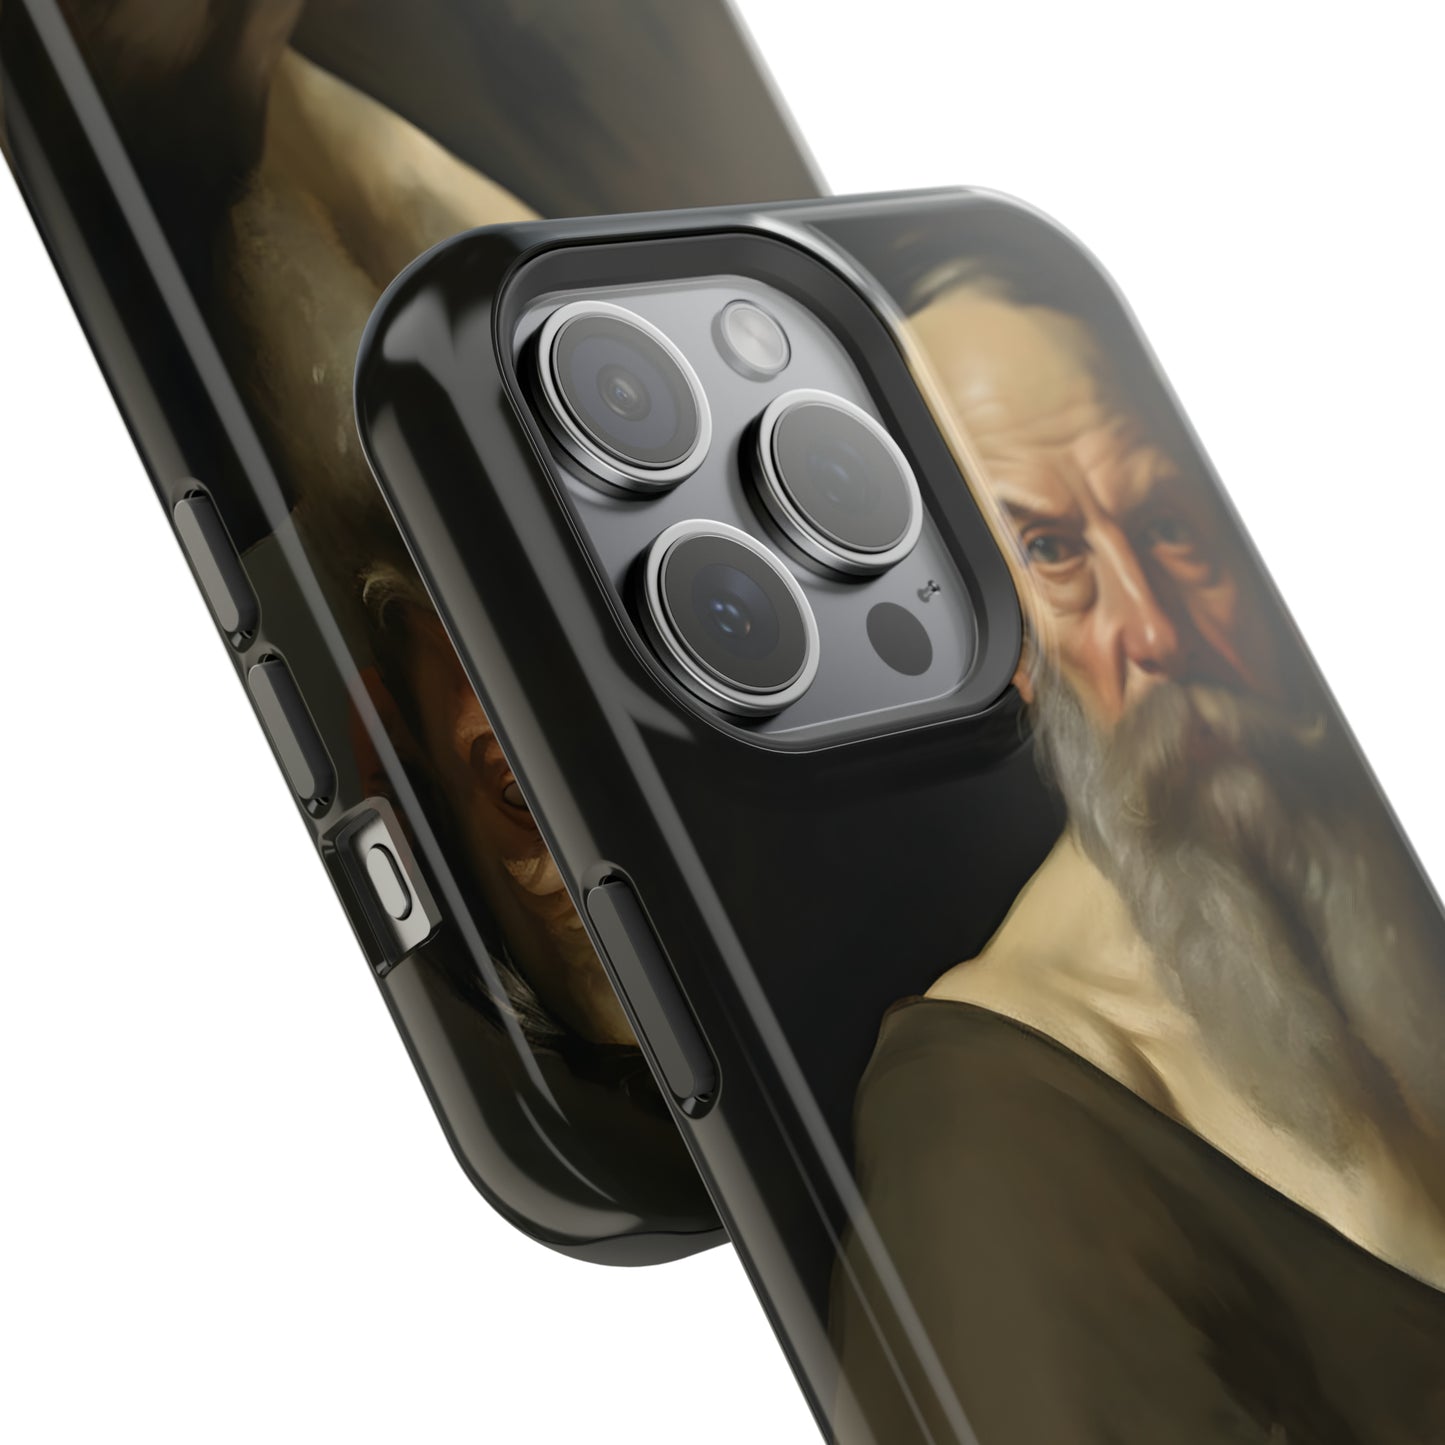 Ask Herodotus MagSafe Tough Mobile Phone Cases